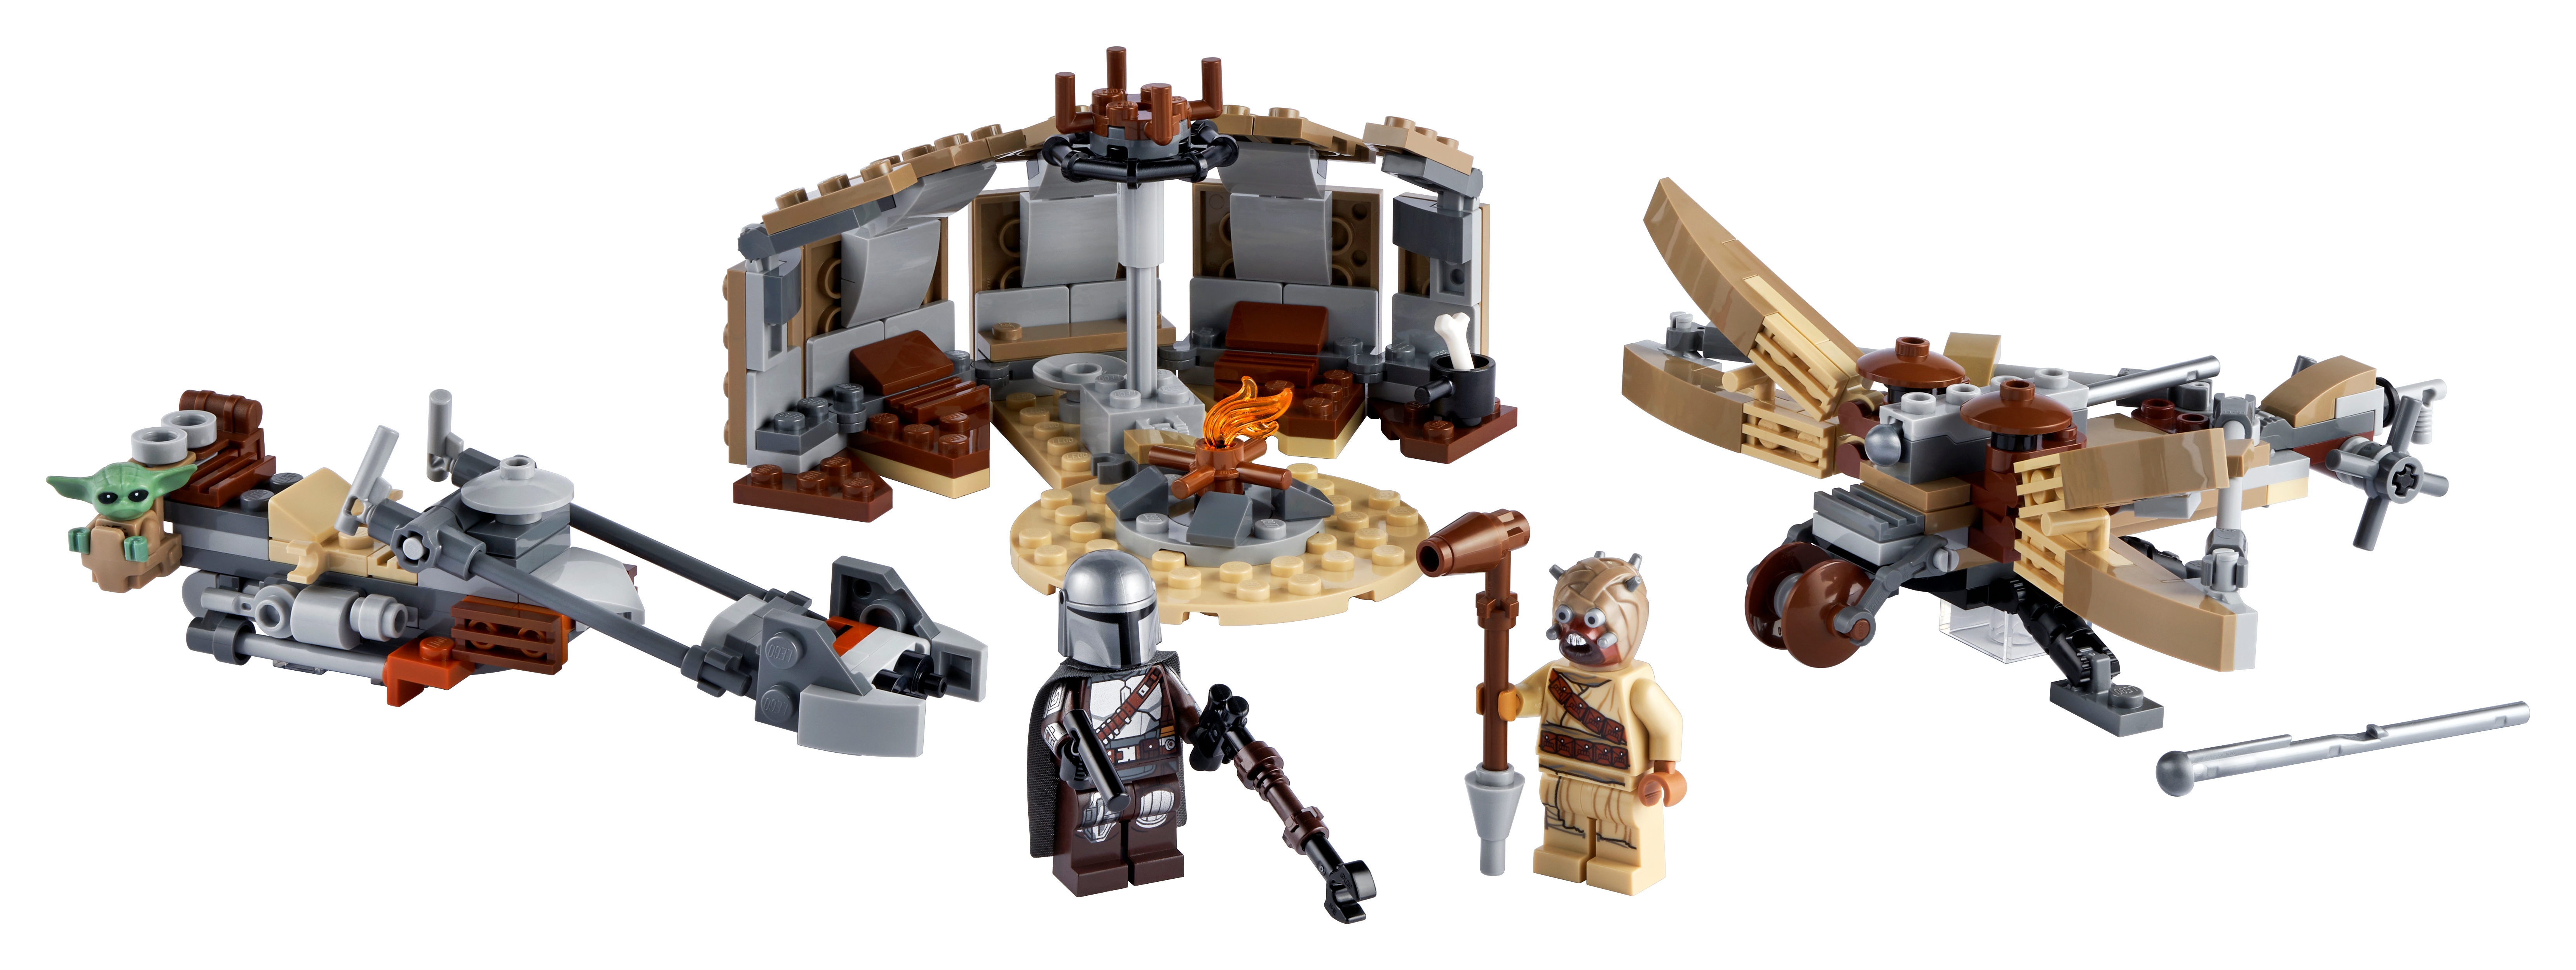 Star Wars Darth Vader Tusken Raider Clone Soldiers Mini Figures Blocks Fits Lego 